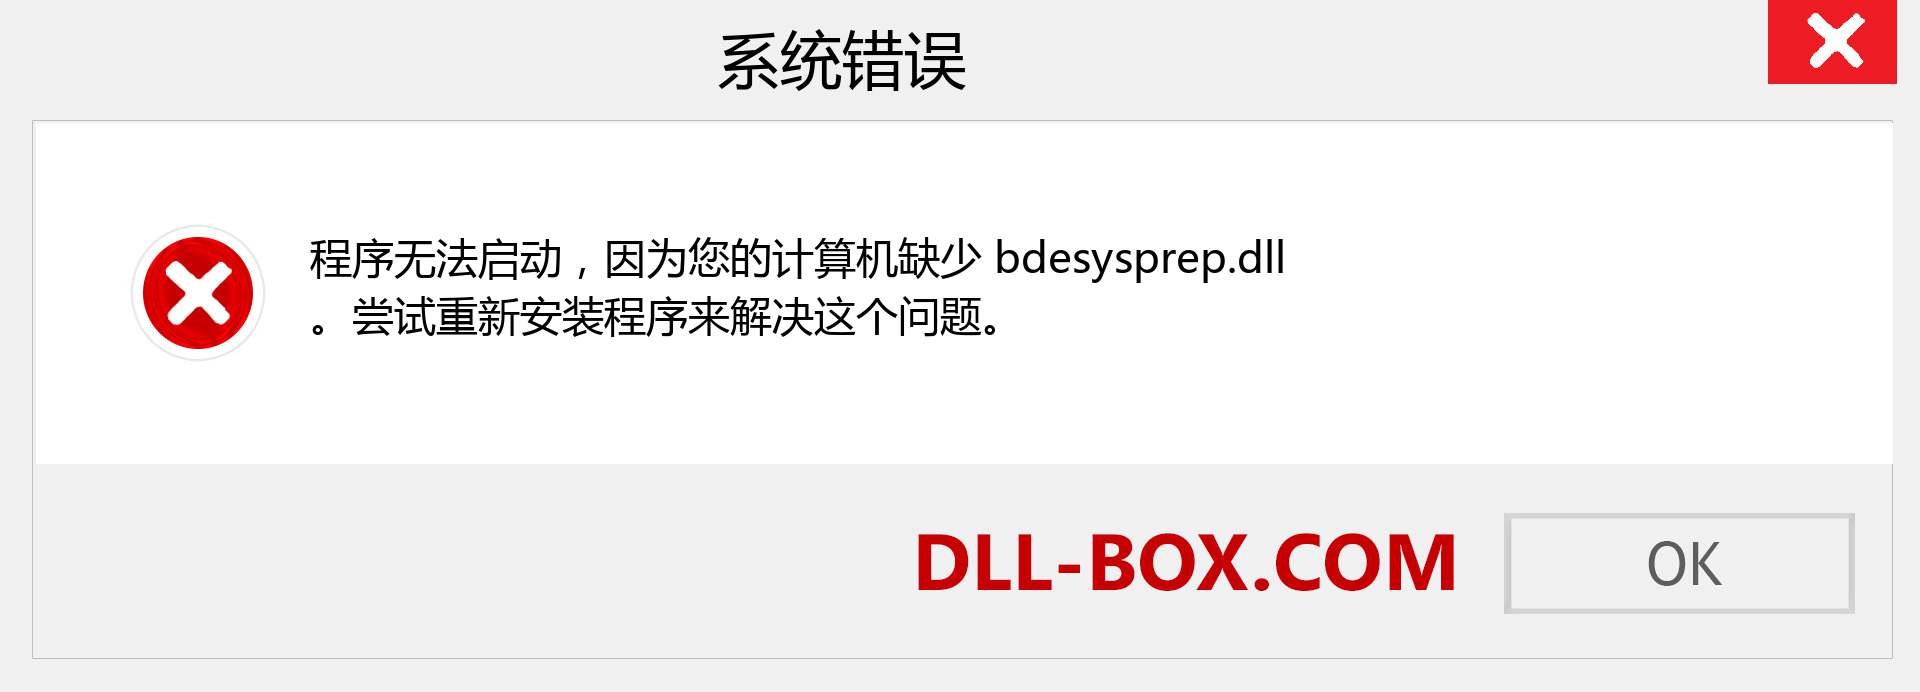 bdesysprep.dll 文件丢失？。 适用于 Windows 7、8、10 的下载 - 修复 Windows、照片、图像上的 bdesysprep dll 丢失错误